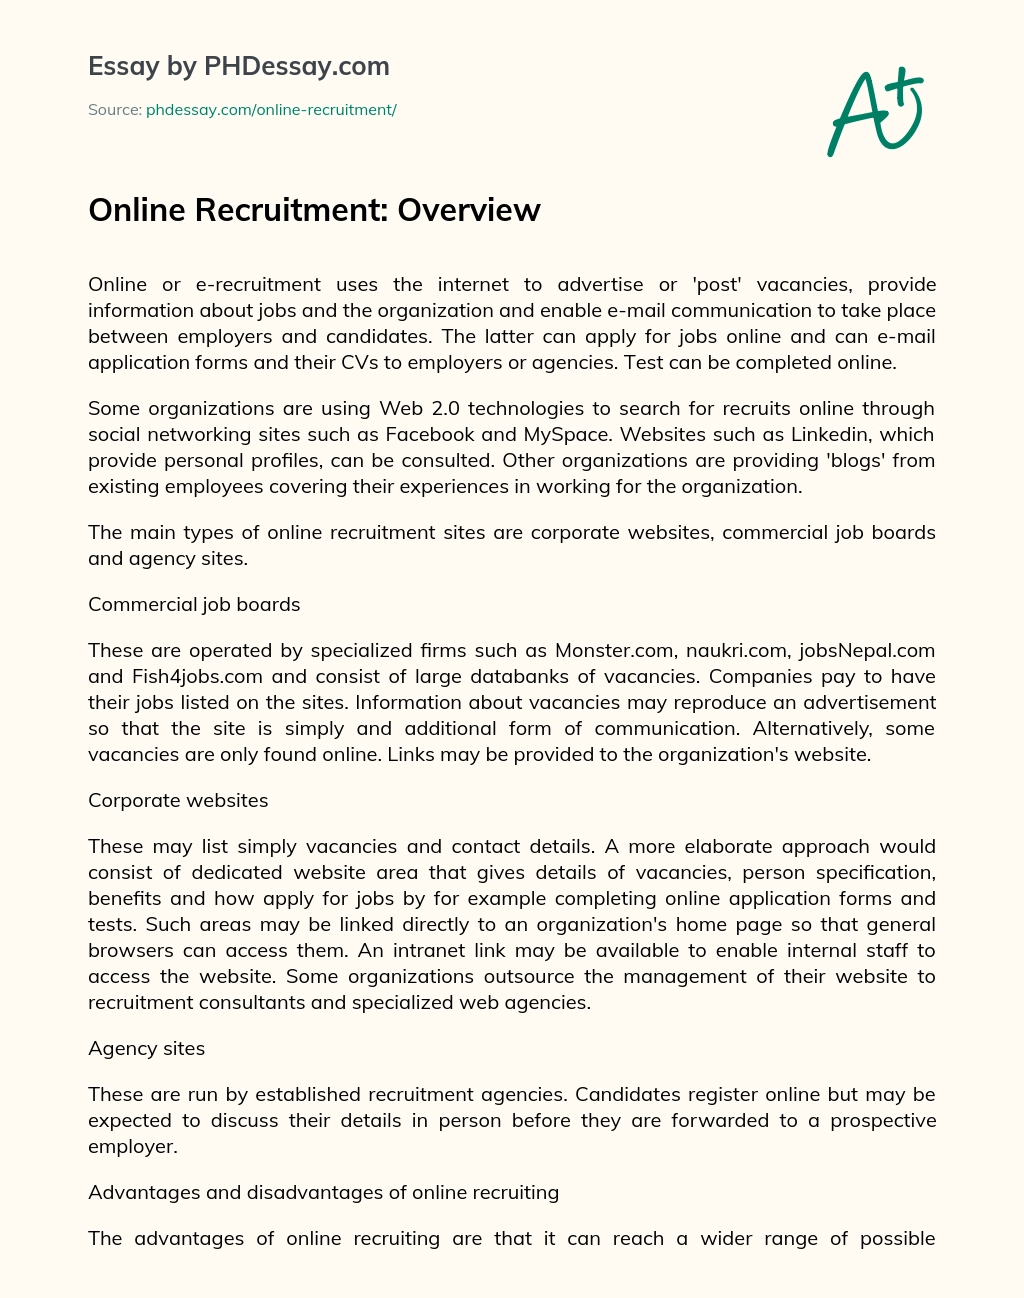 Реферат: OnLine Recruitment Essay Research Paper Online recruiting